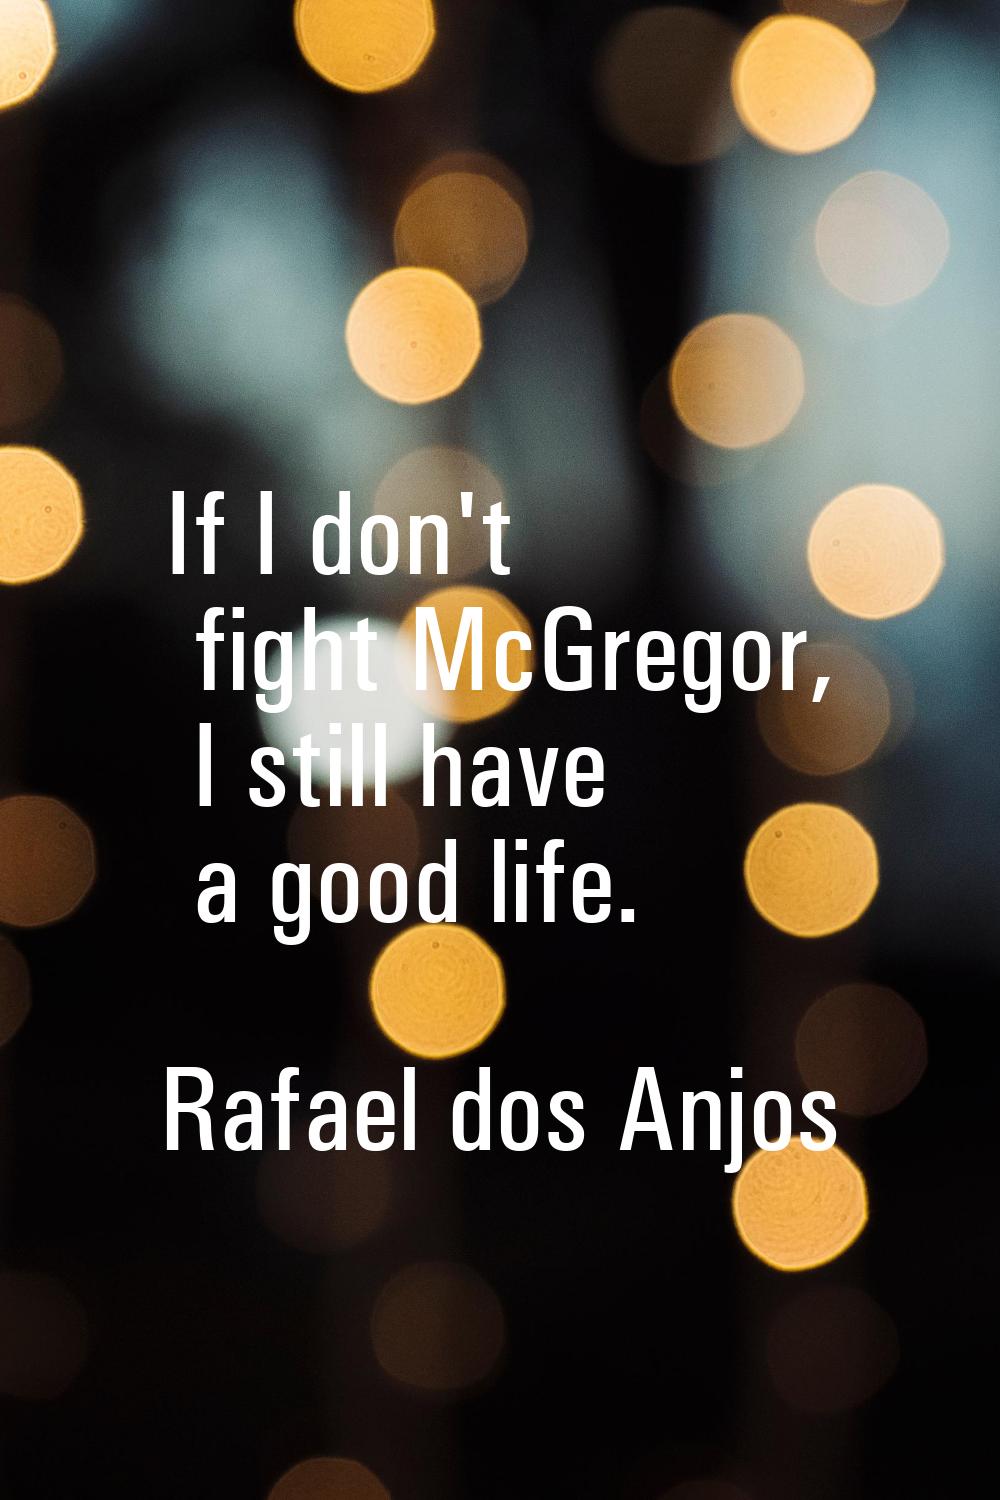 If I don't fight McGregor, I still have a good life.